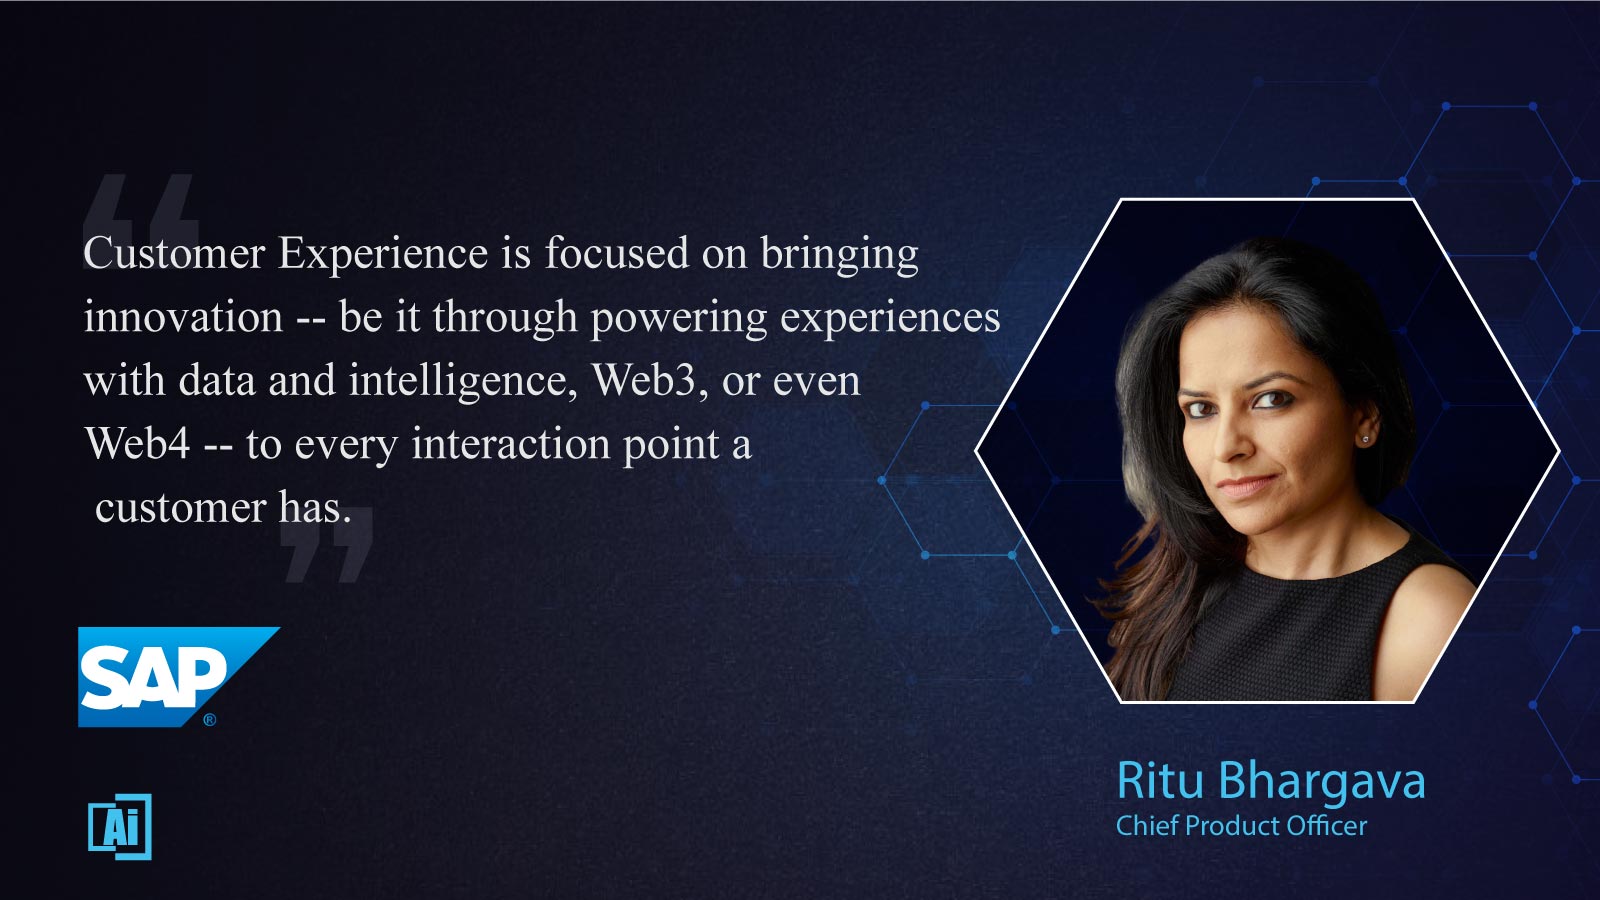 Ritu Bhargava, Chief Product Officer at SAP CX